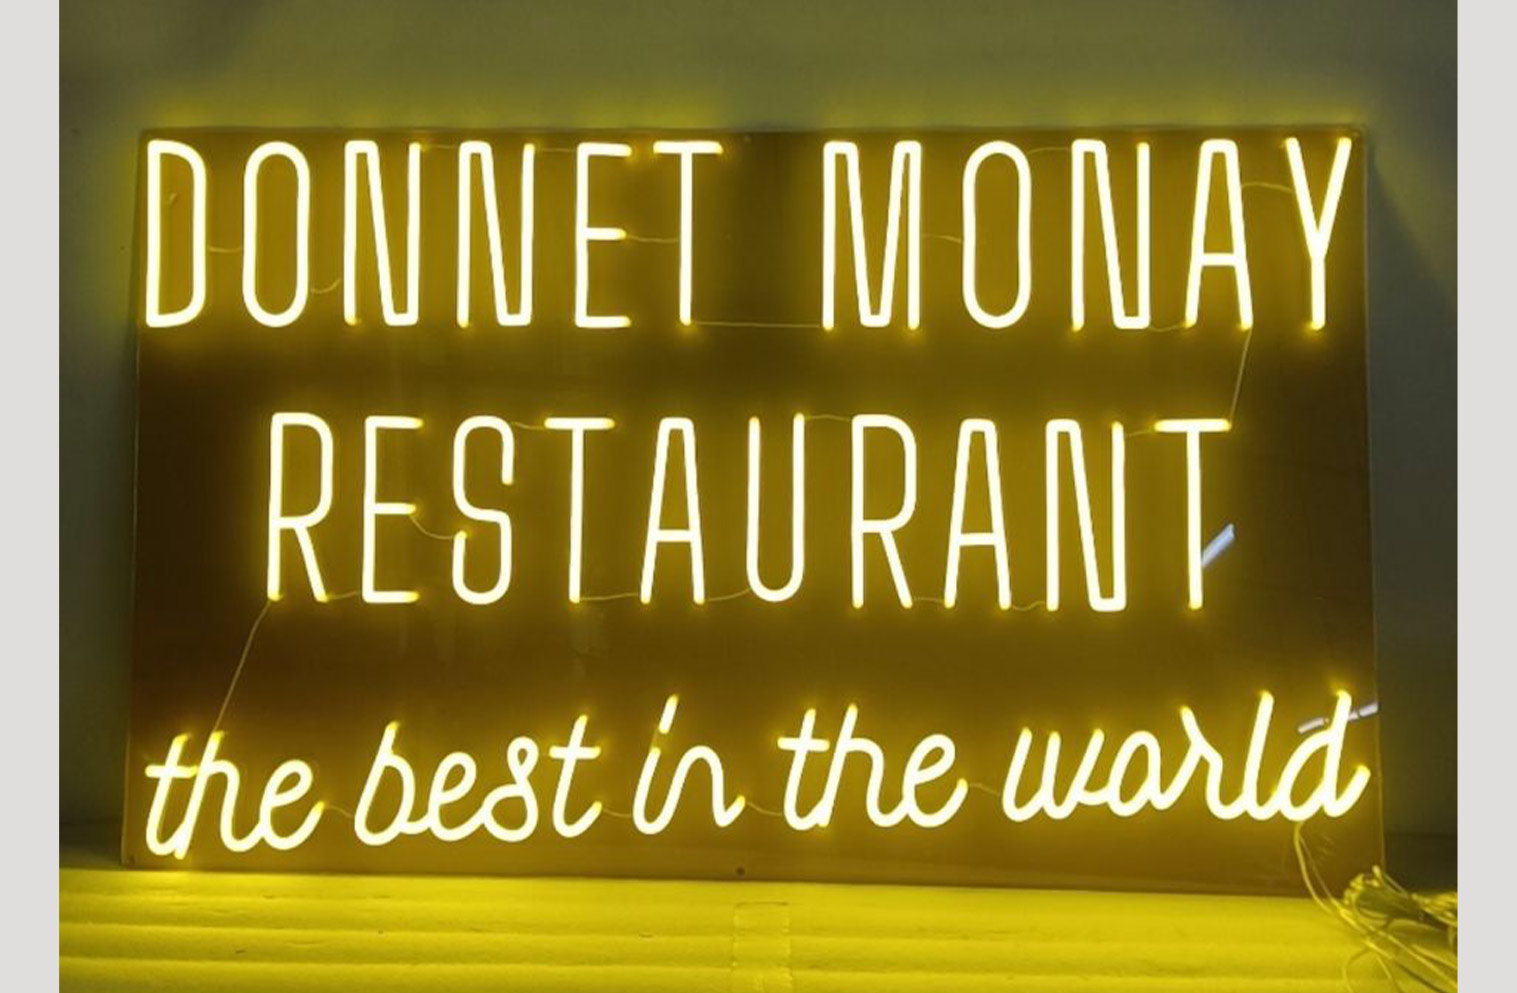 Donnet monay restaurant